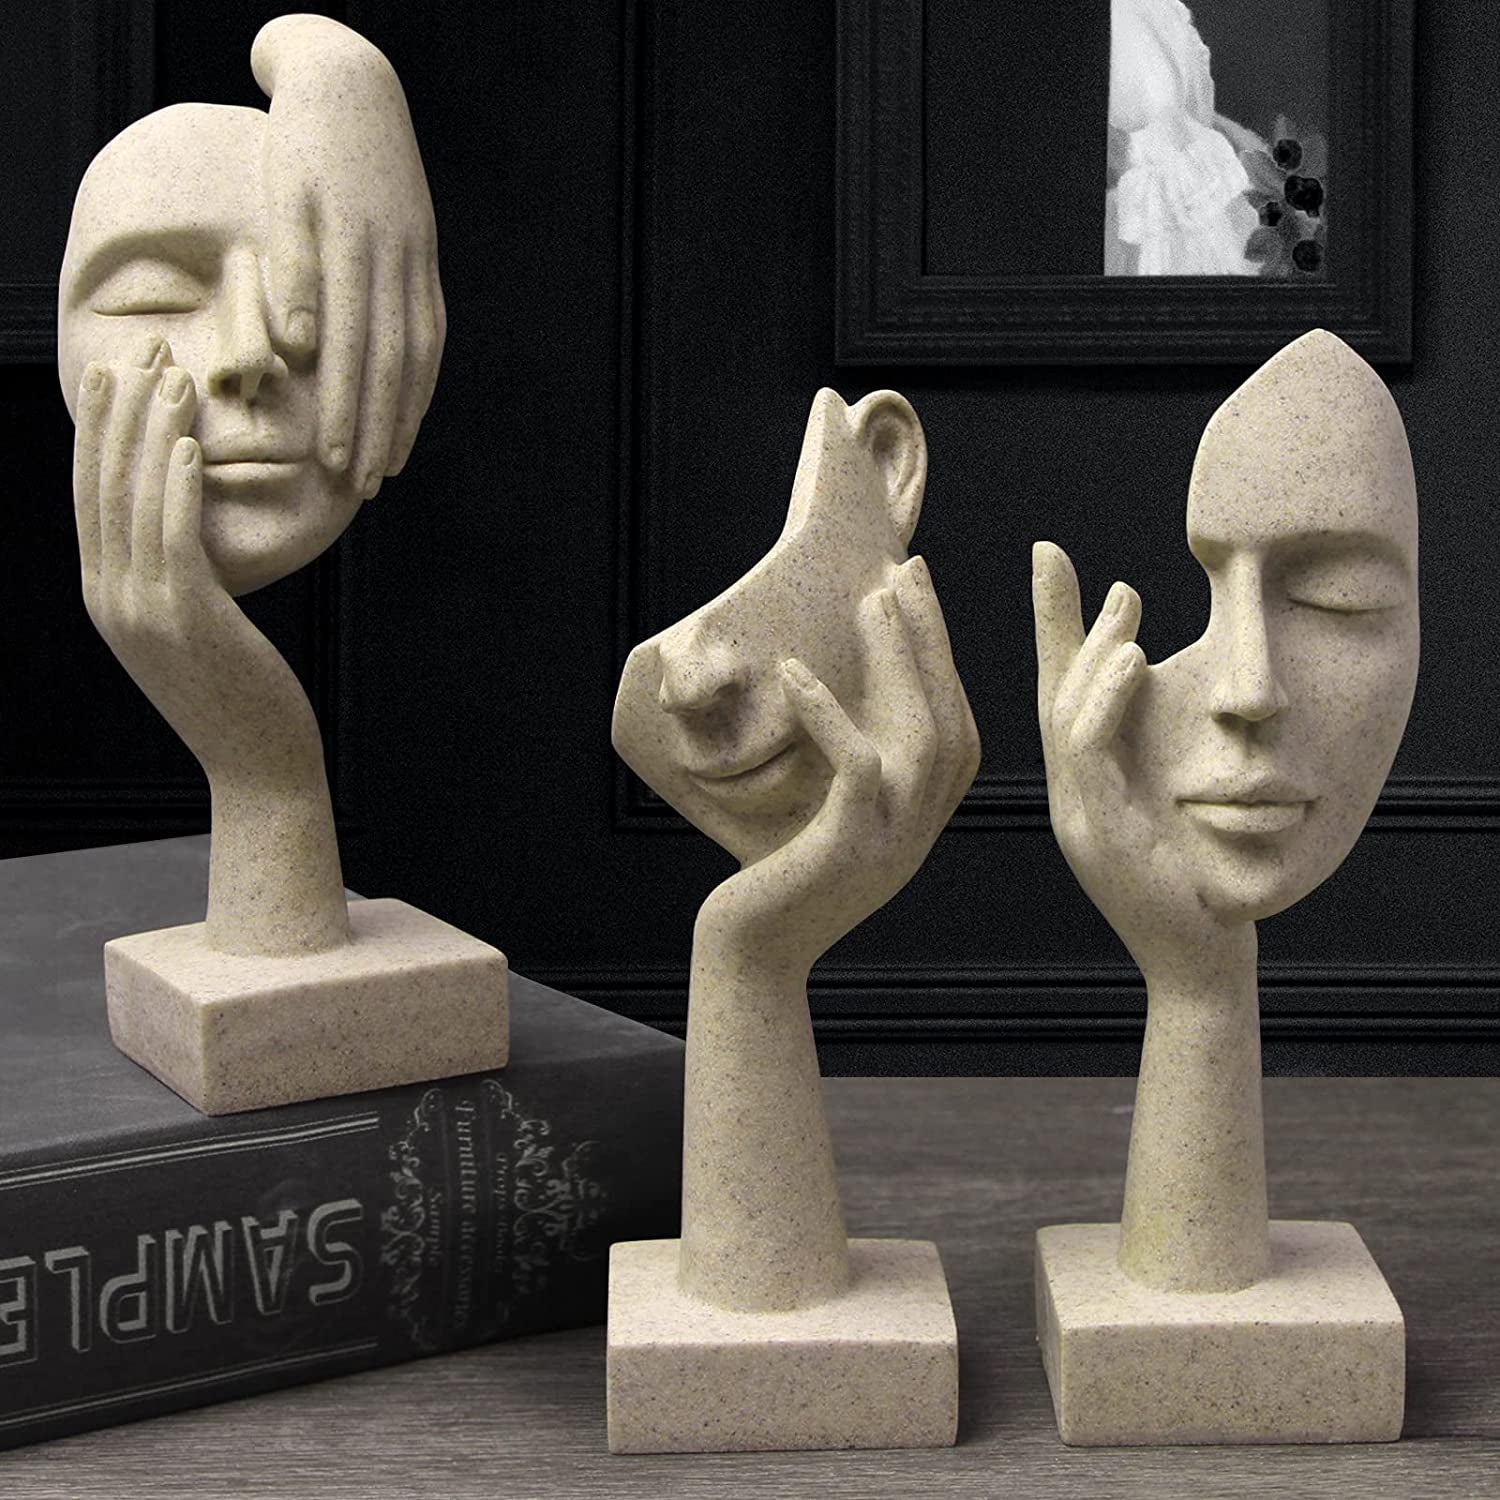 3 Pcs Thinker Statue,Modern Home Resin Sculptures,Collectible Figurines for Home Office Bookshelf Desktop Decor(Sandstone)